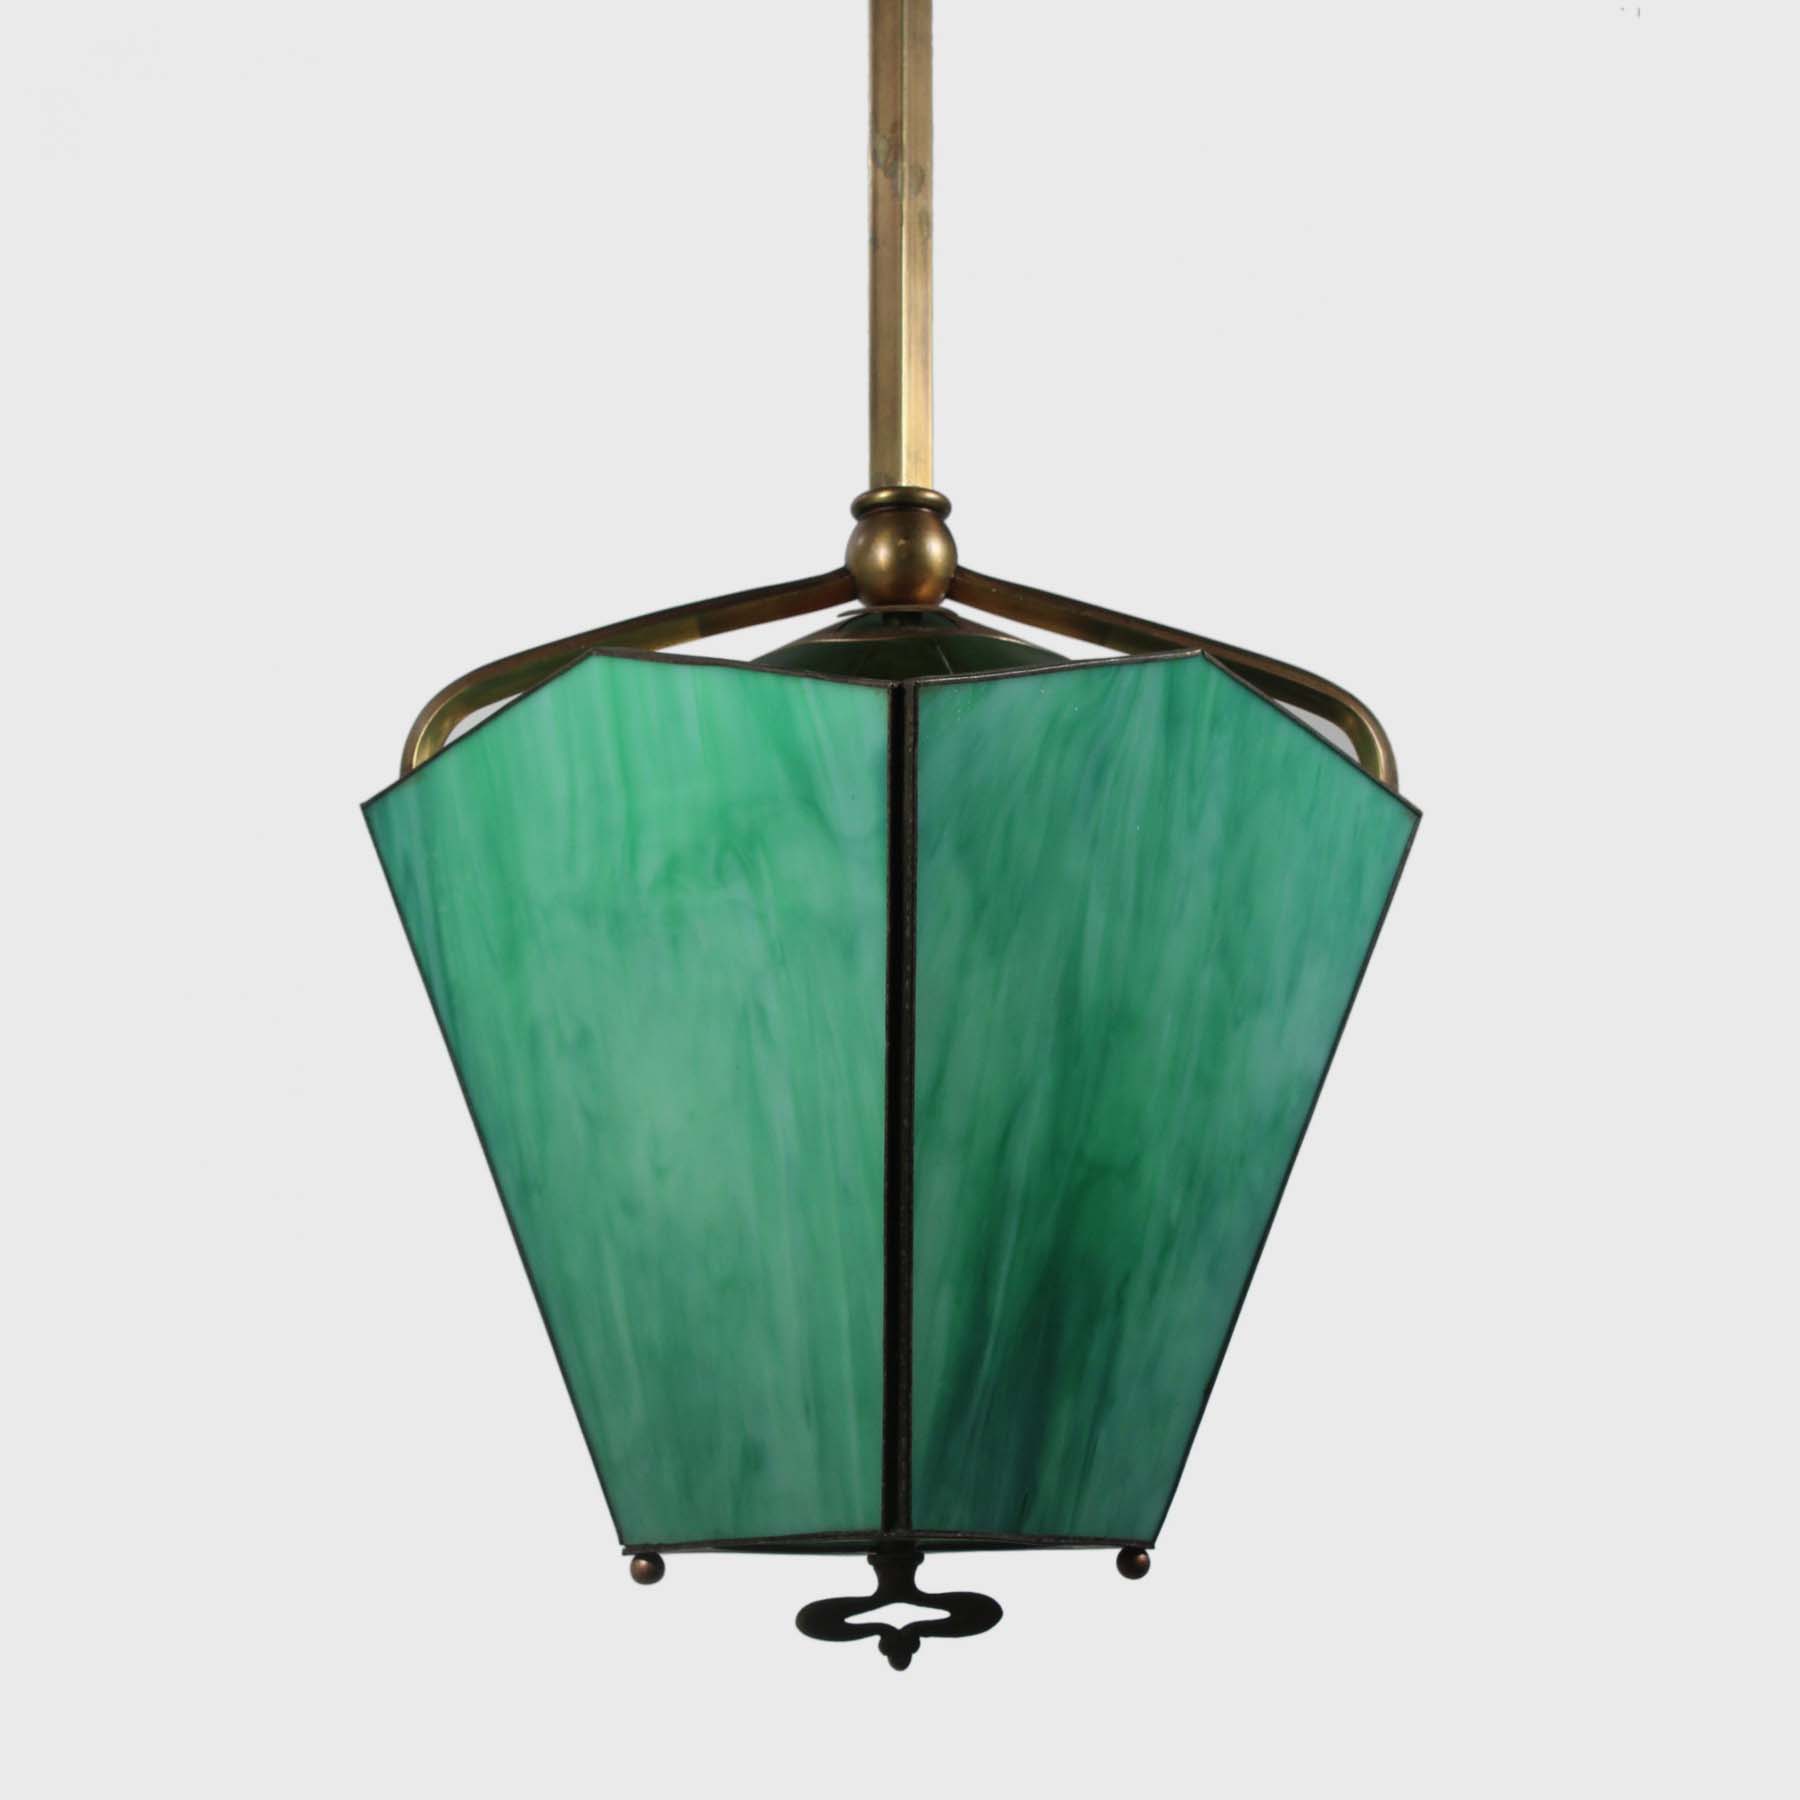 Antique Brass Gas Lantern, Green Slag Glass-72407